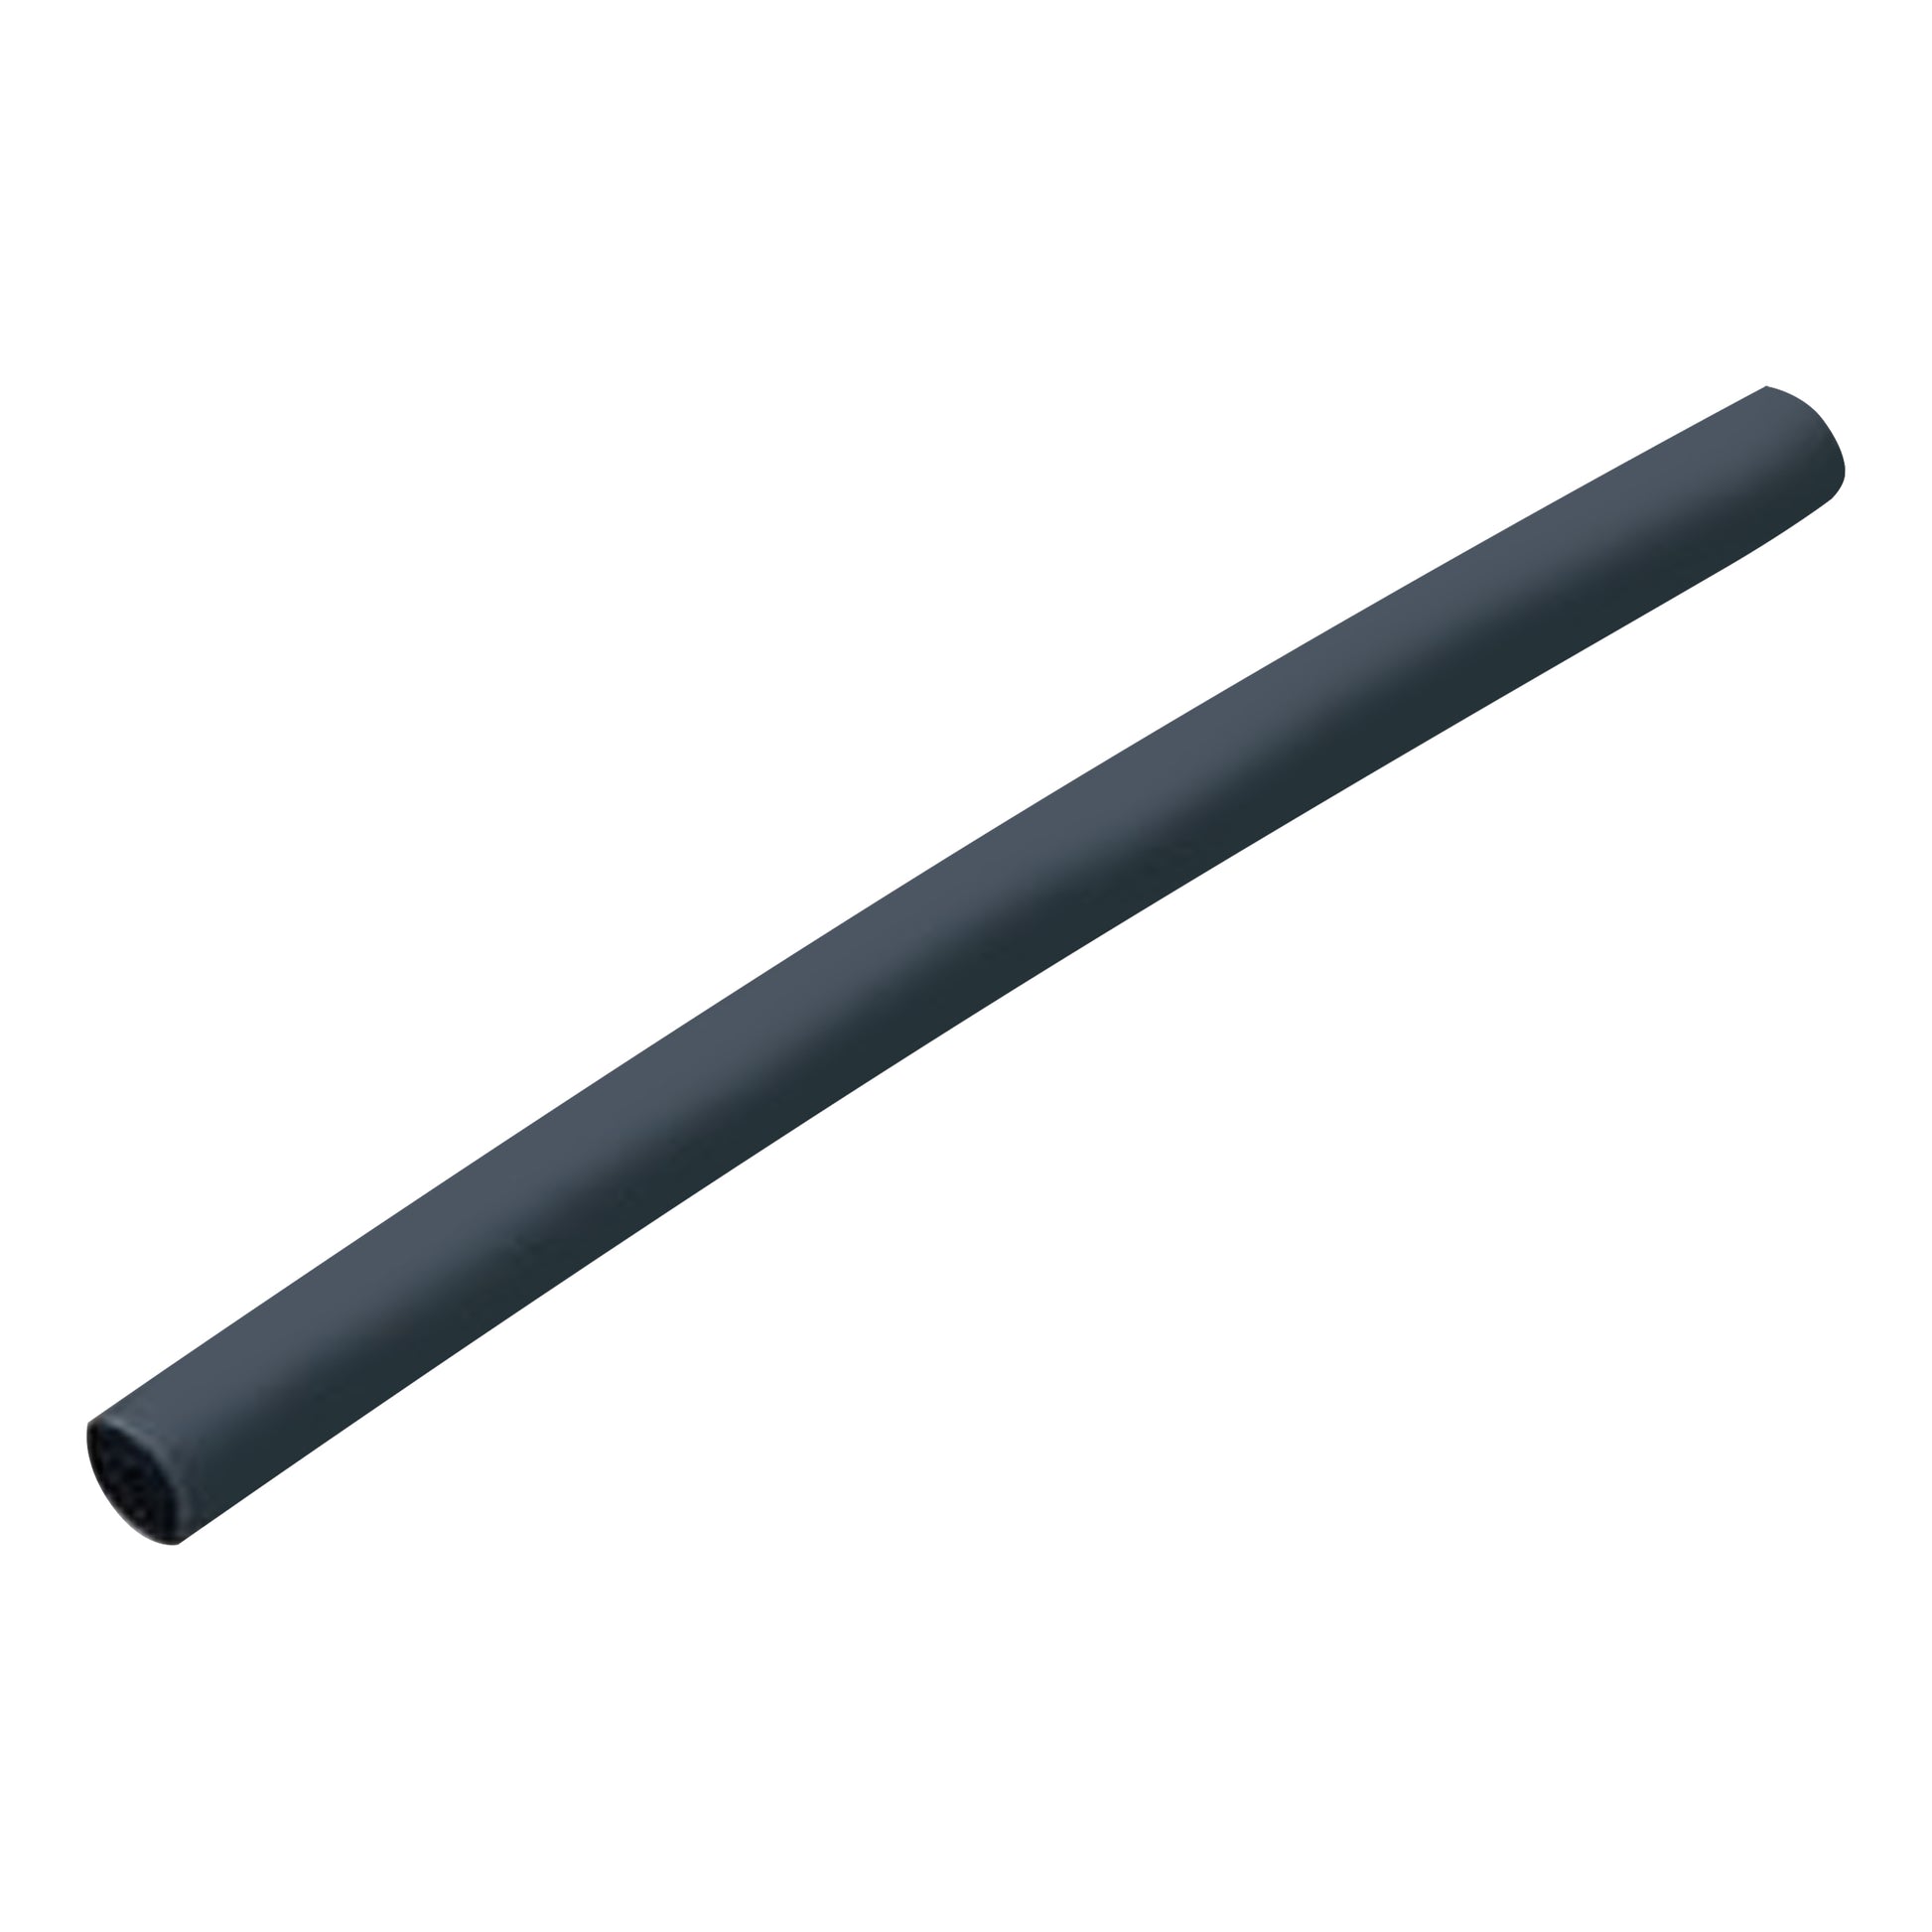 Flexible Thin Single Wall Non-Adhesive Heat Shrink Tubing 2:1 Black 1" ID - 50' Ft Spool